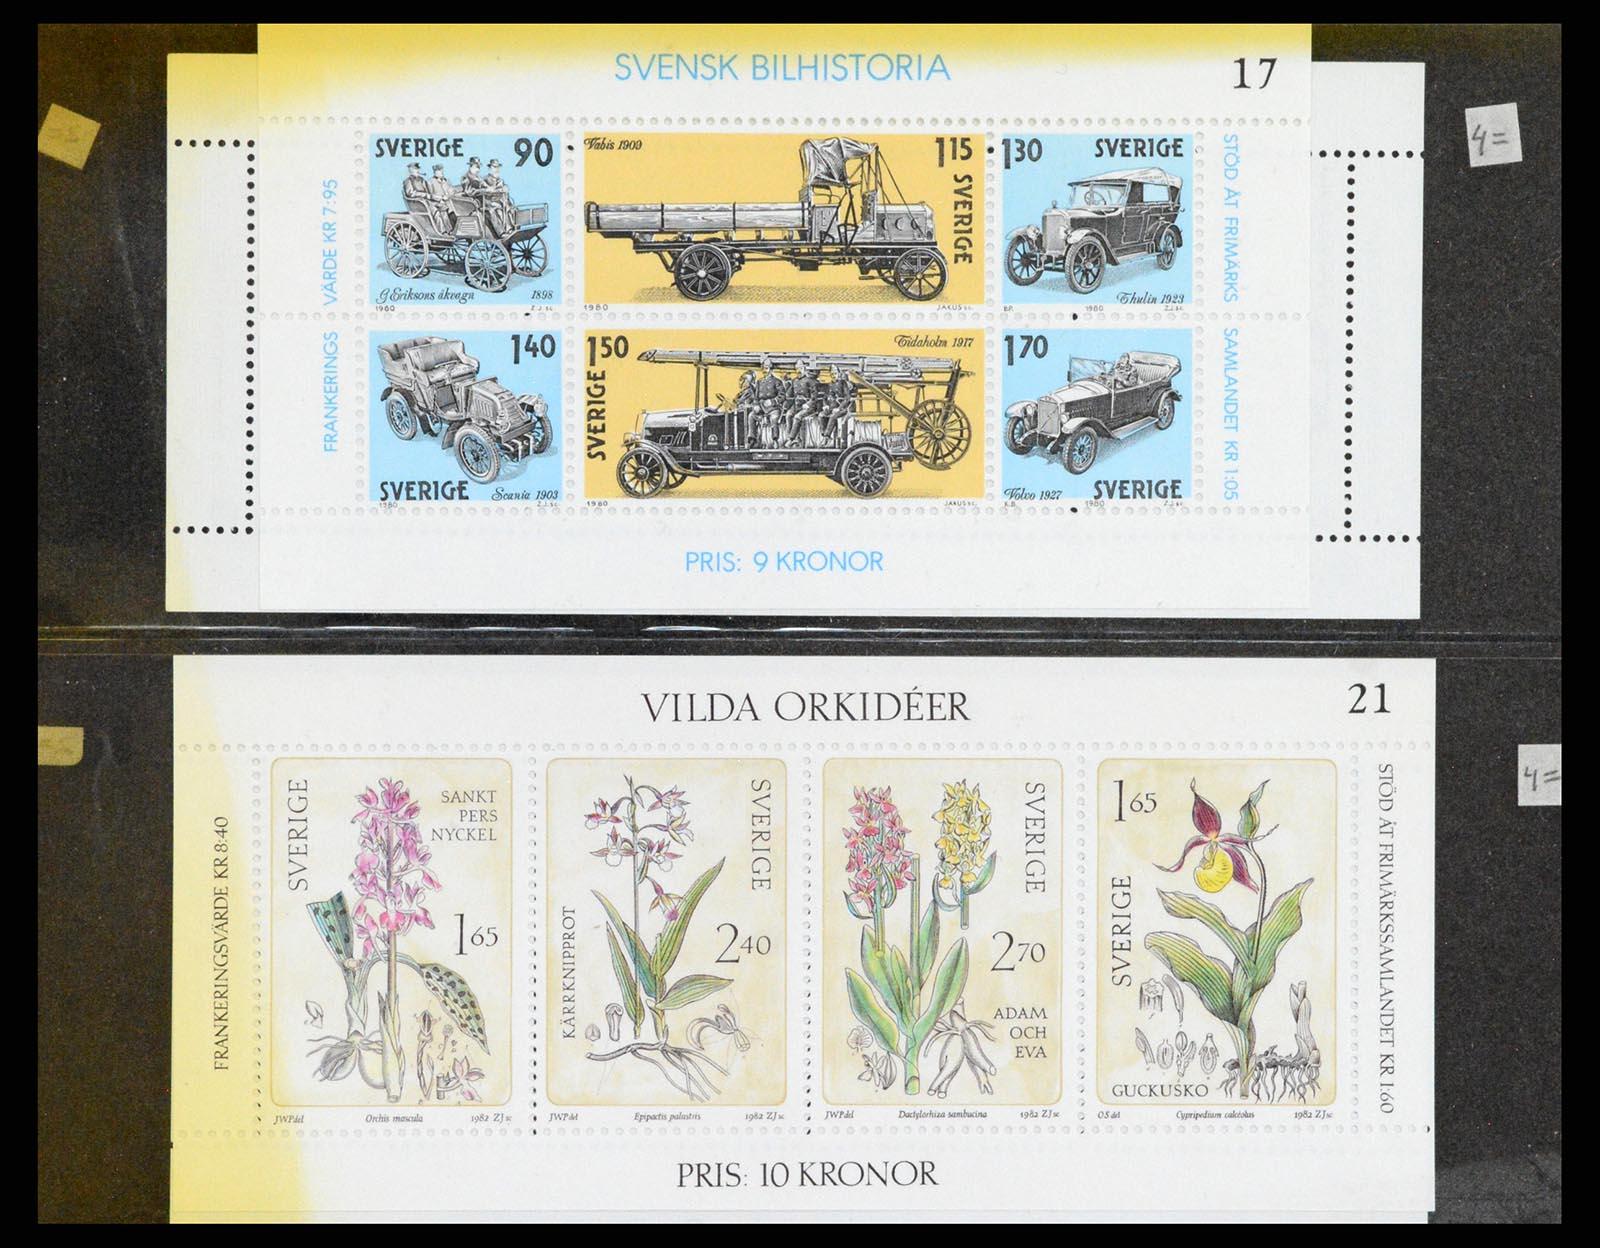 37341 002 - Stamp collection 37341 Sweden stamp booklets.